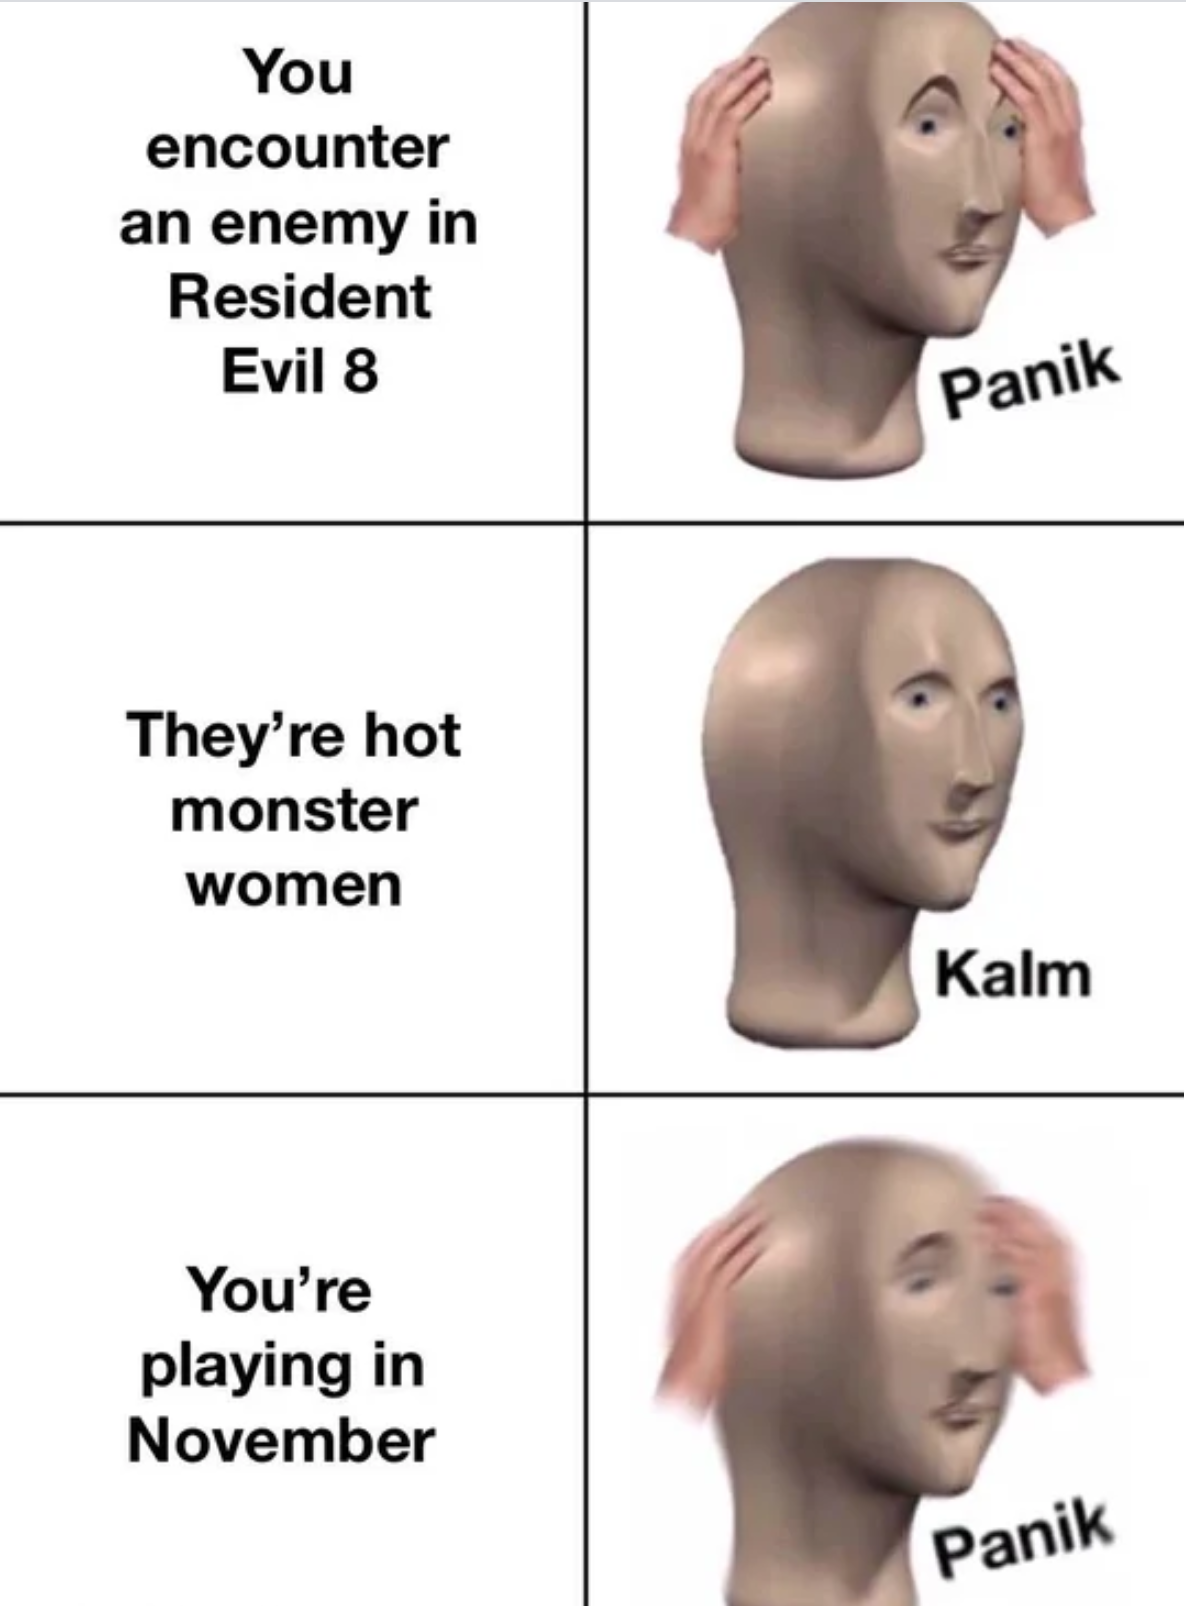 panik kalm panik meme - You encounter an enemy in Resident Evil 8 Panik They're hot monster women Kalm You're playing in November Panik